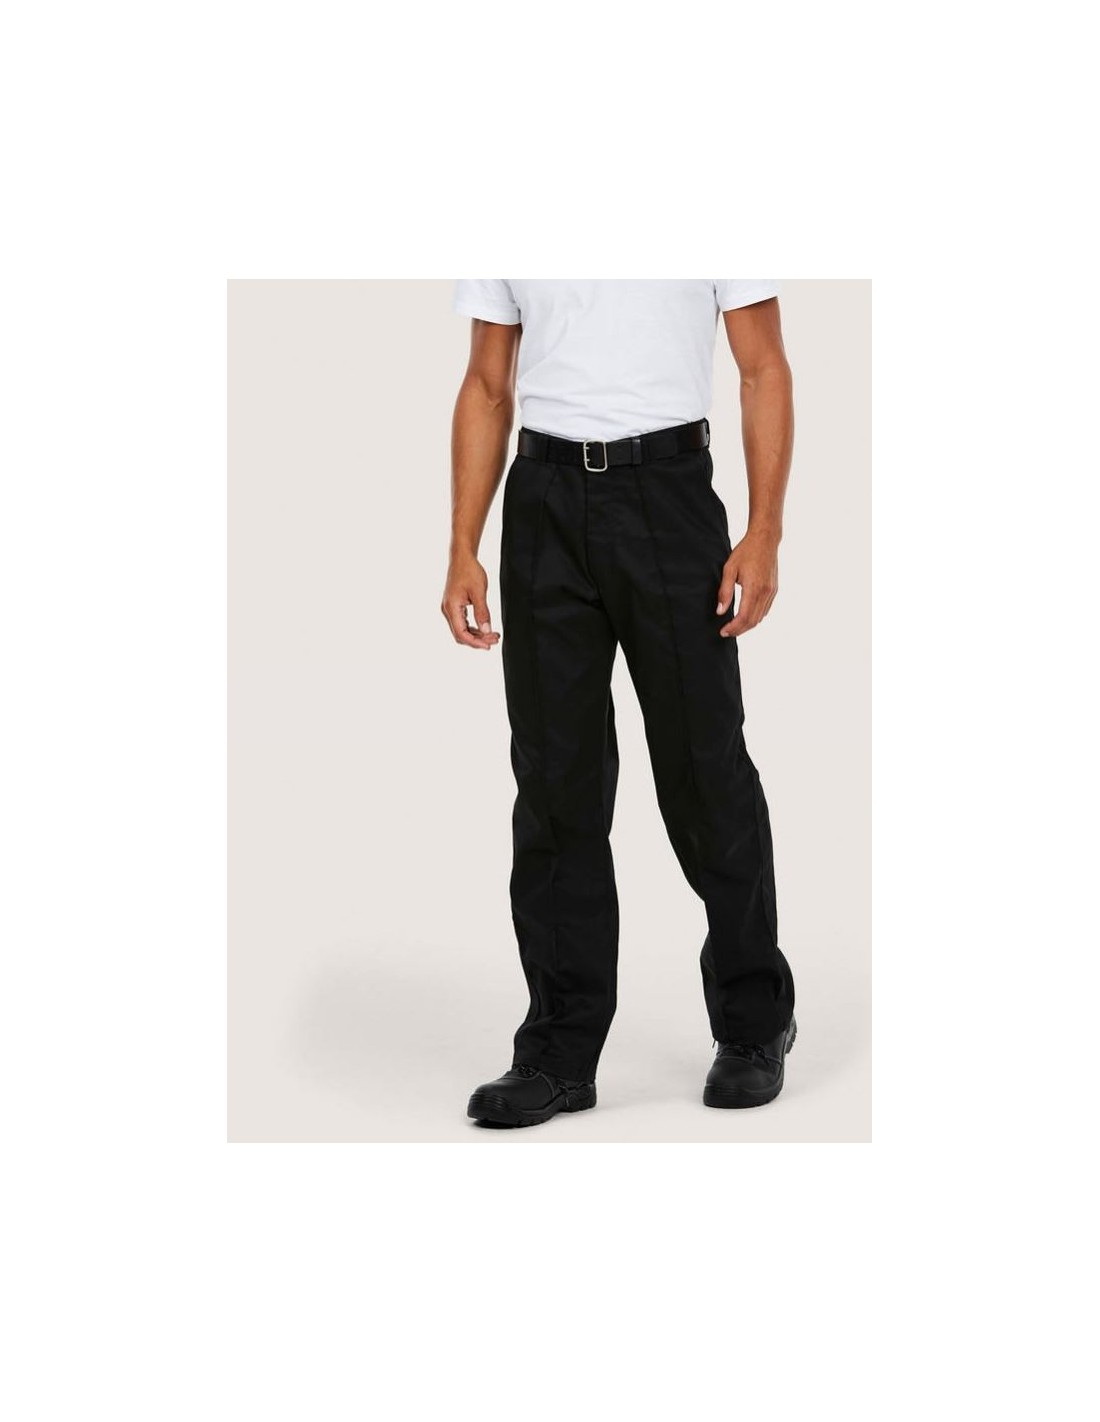 Personalised Custom Embroidered Uneek Cargo Combat Trousers Workwear Pants  UC902 | eBay